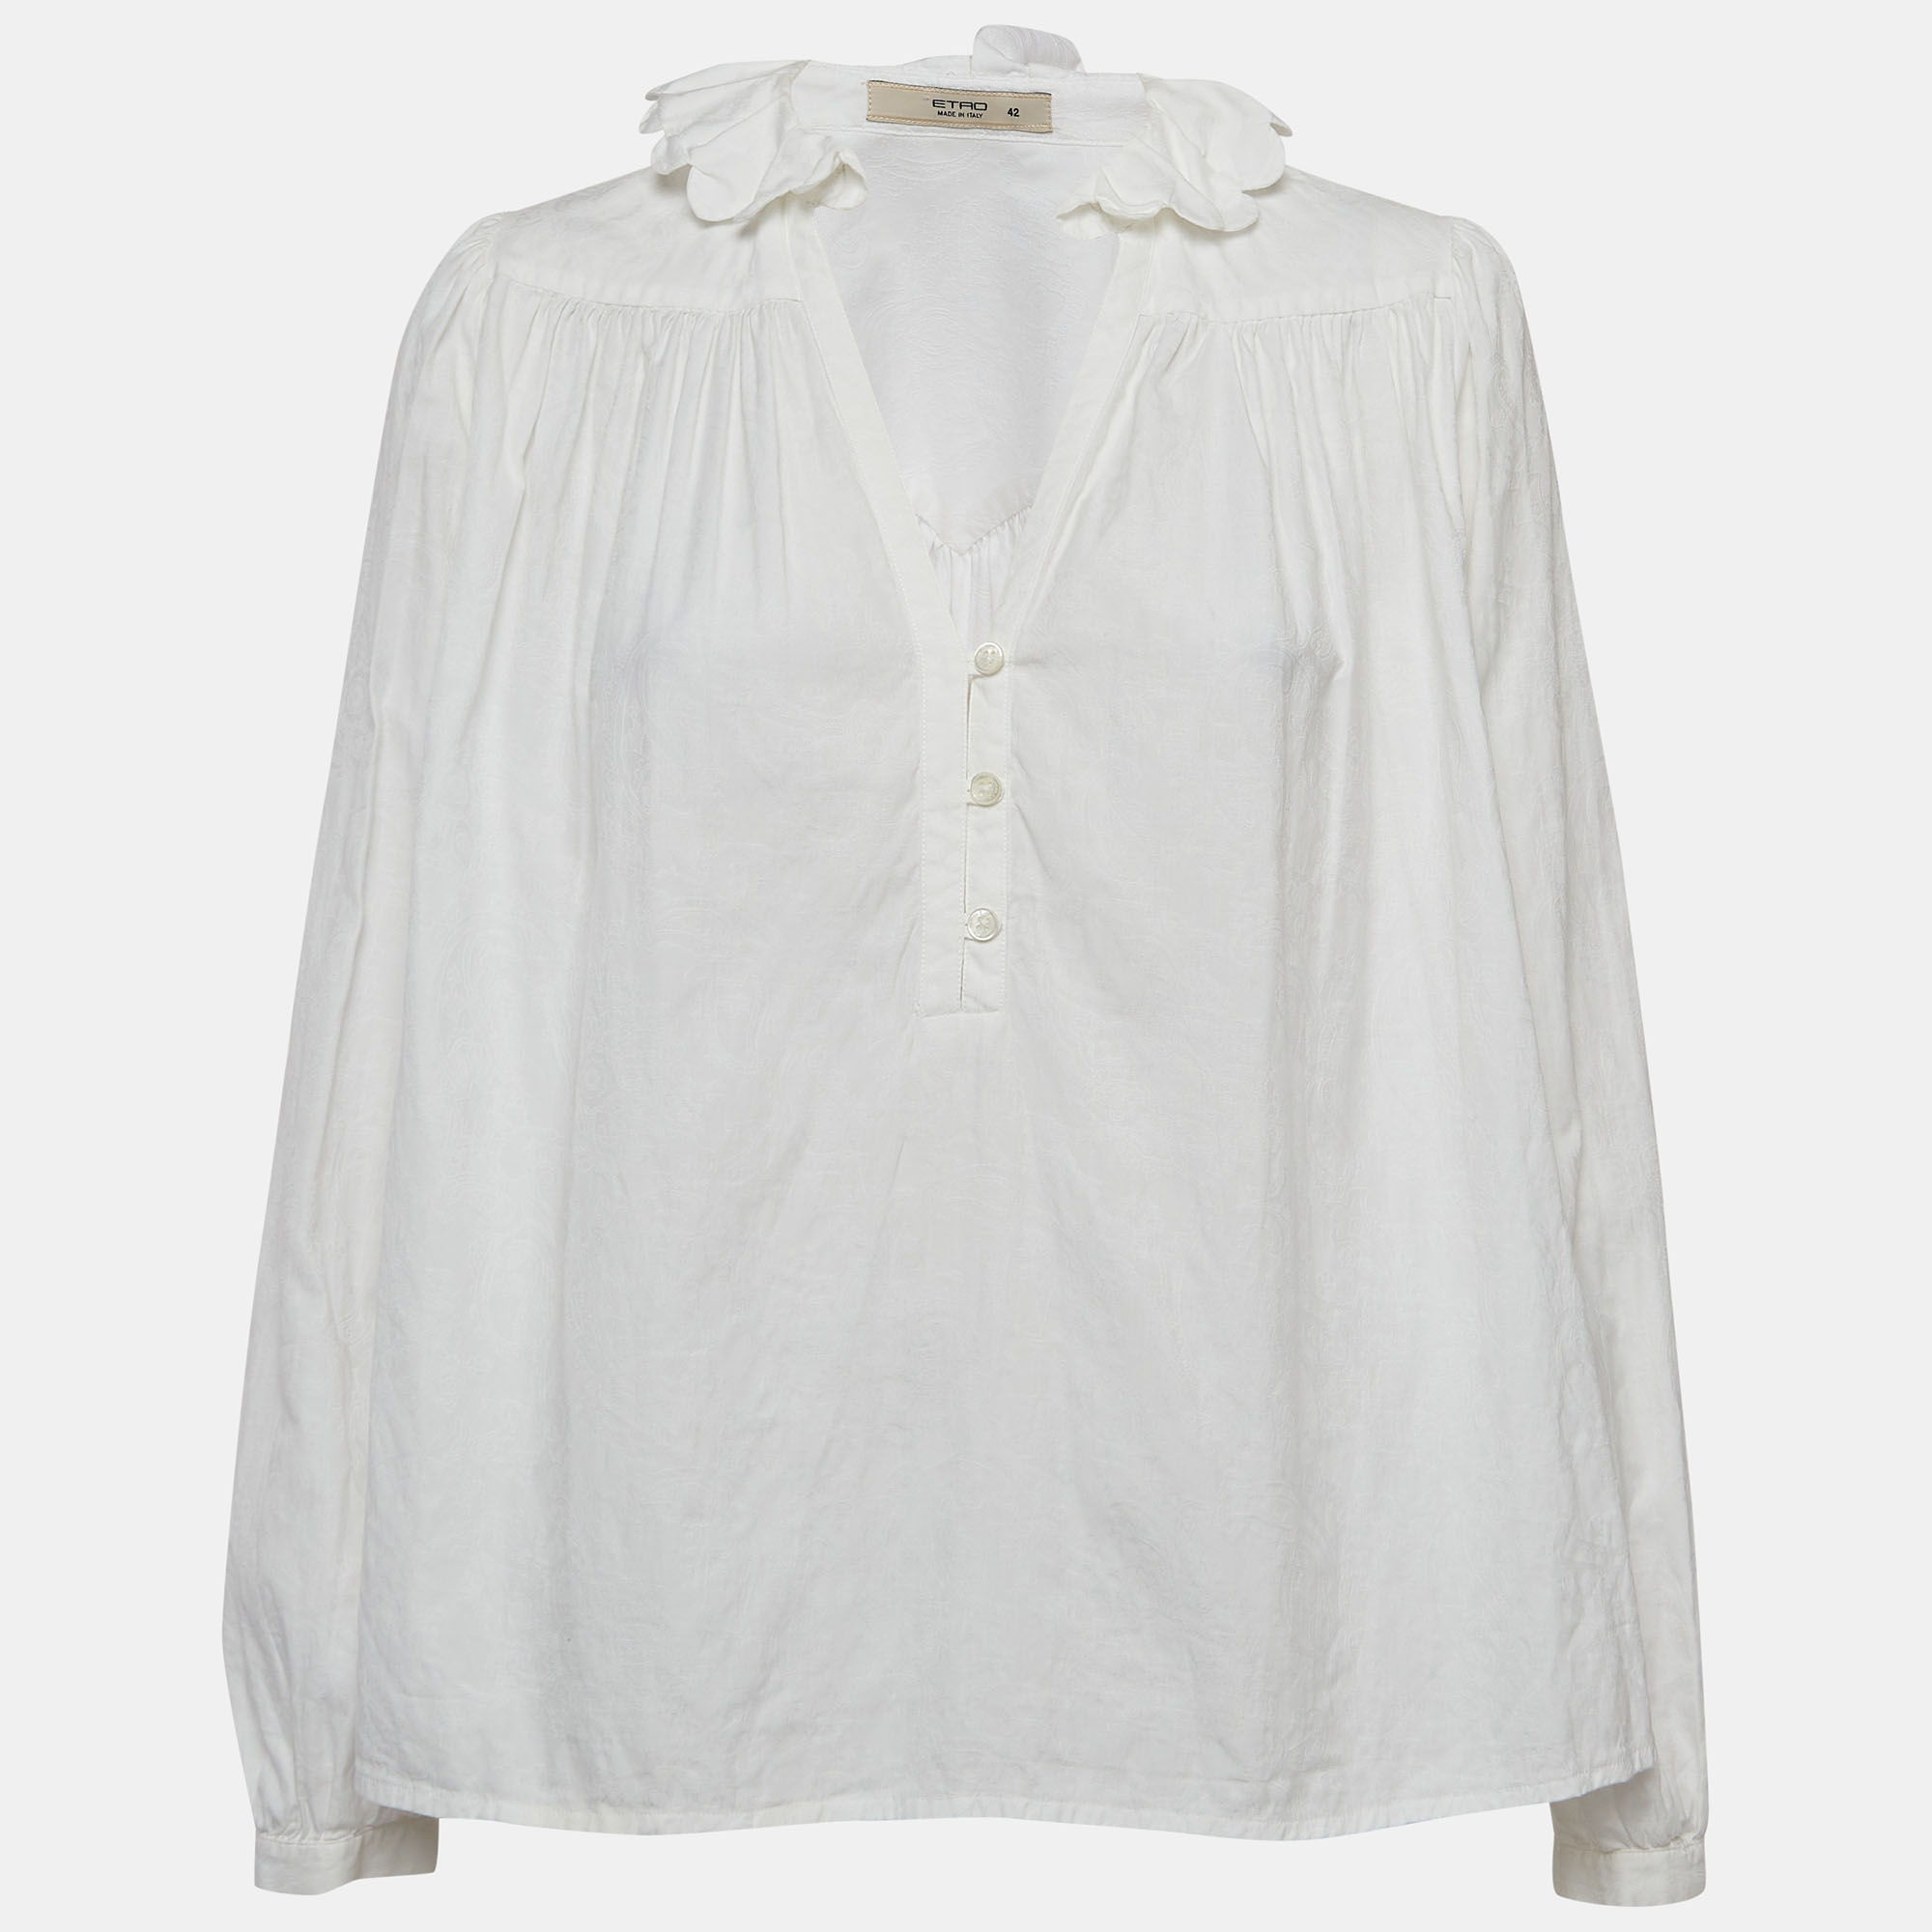 Etro white paisley patterned cotton shirt blouse m